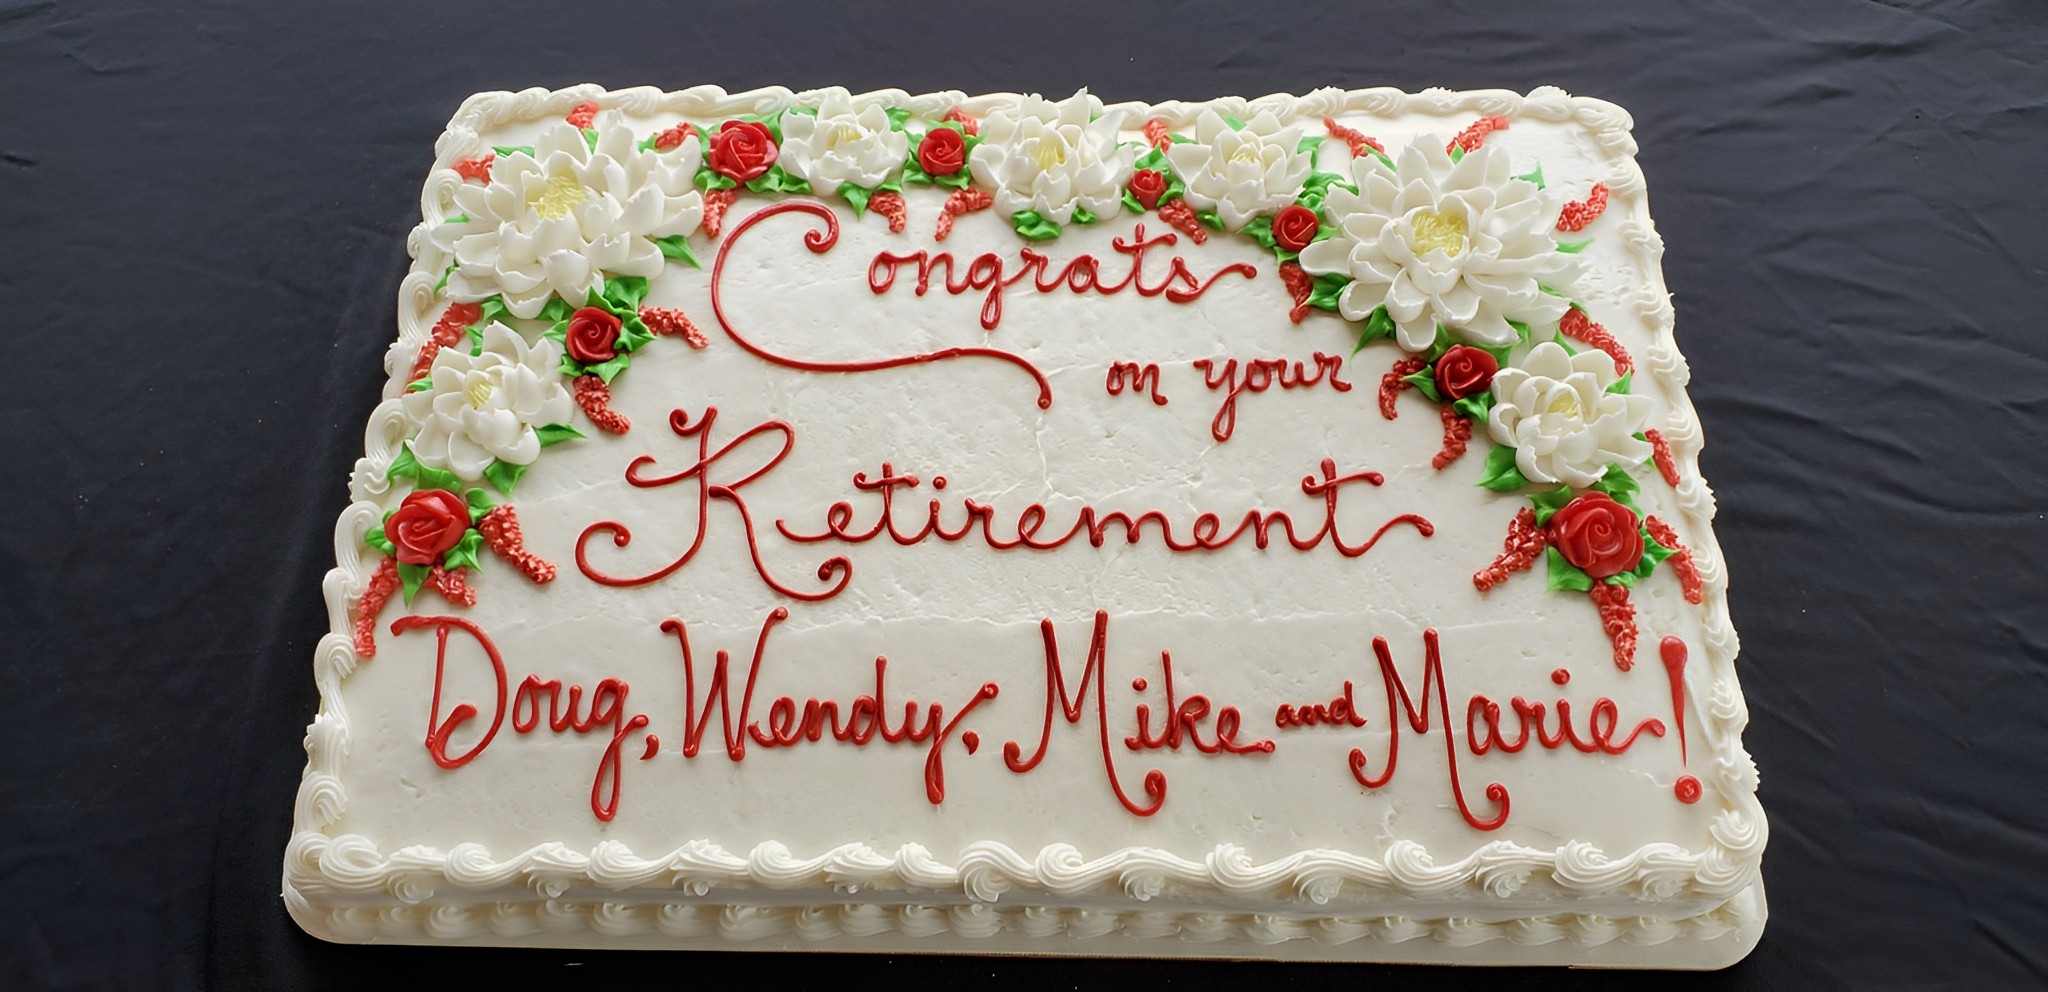 Cake for retirees